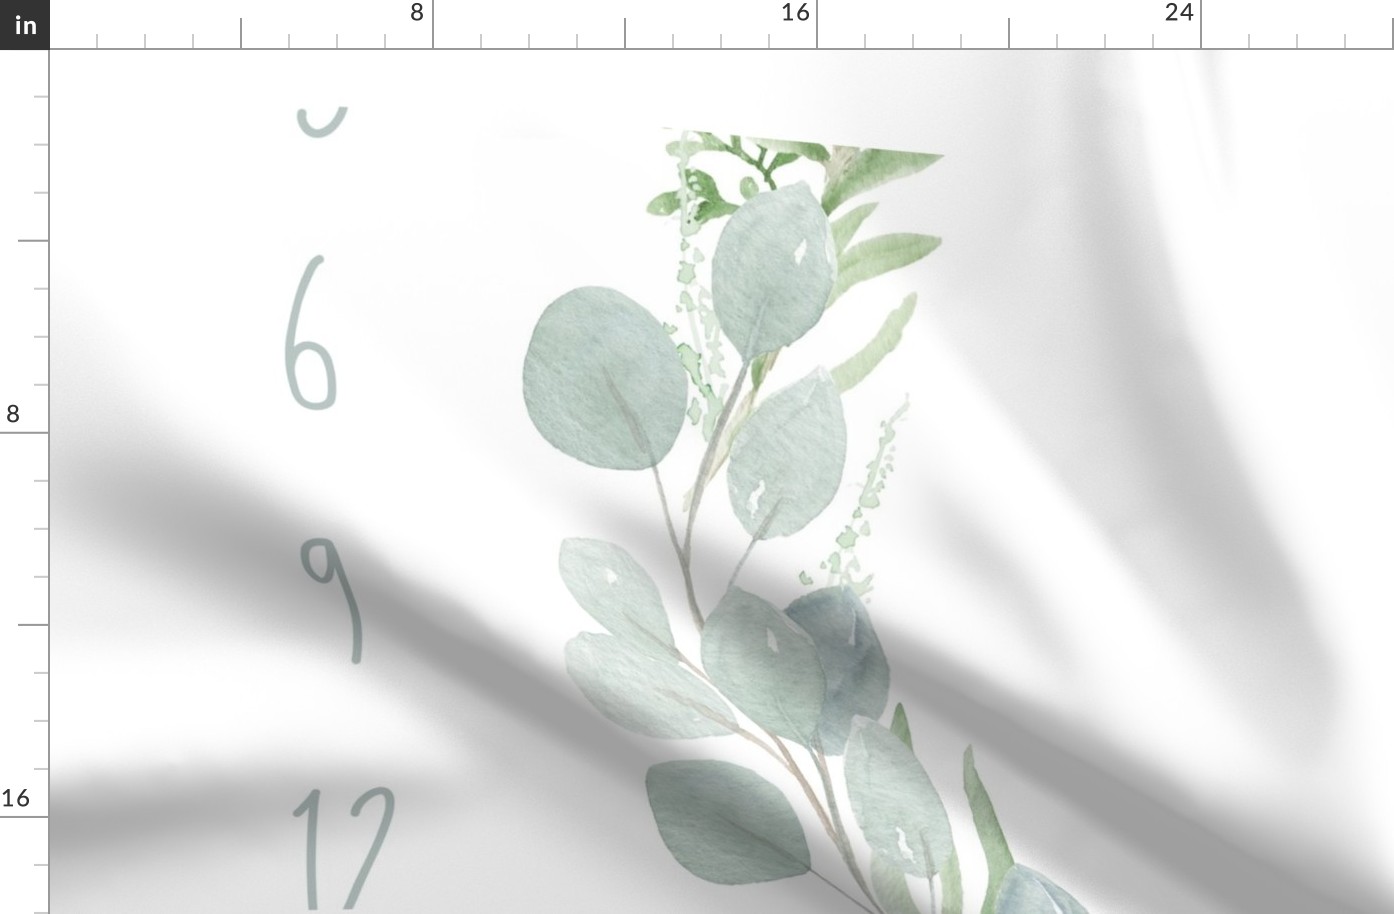 French 1-Meter // Eucalyptus Leaves Baby Milestone Blanket